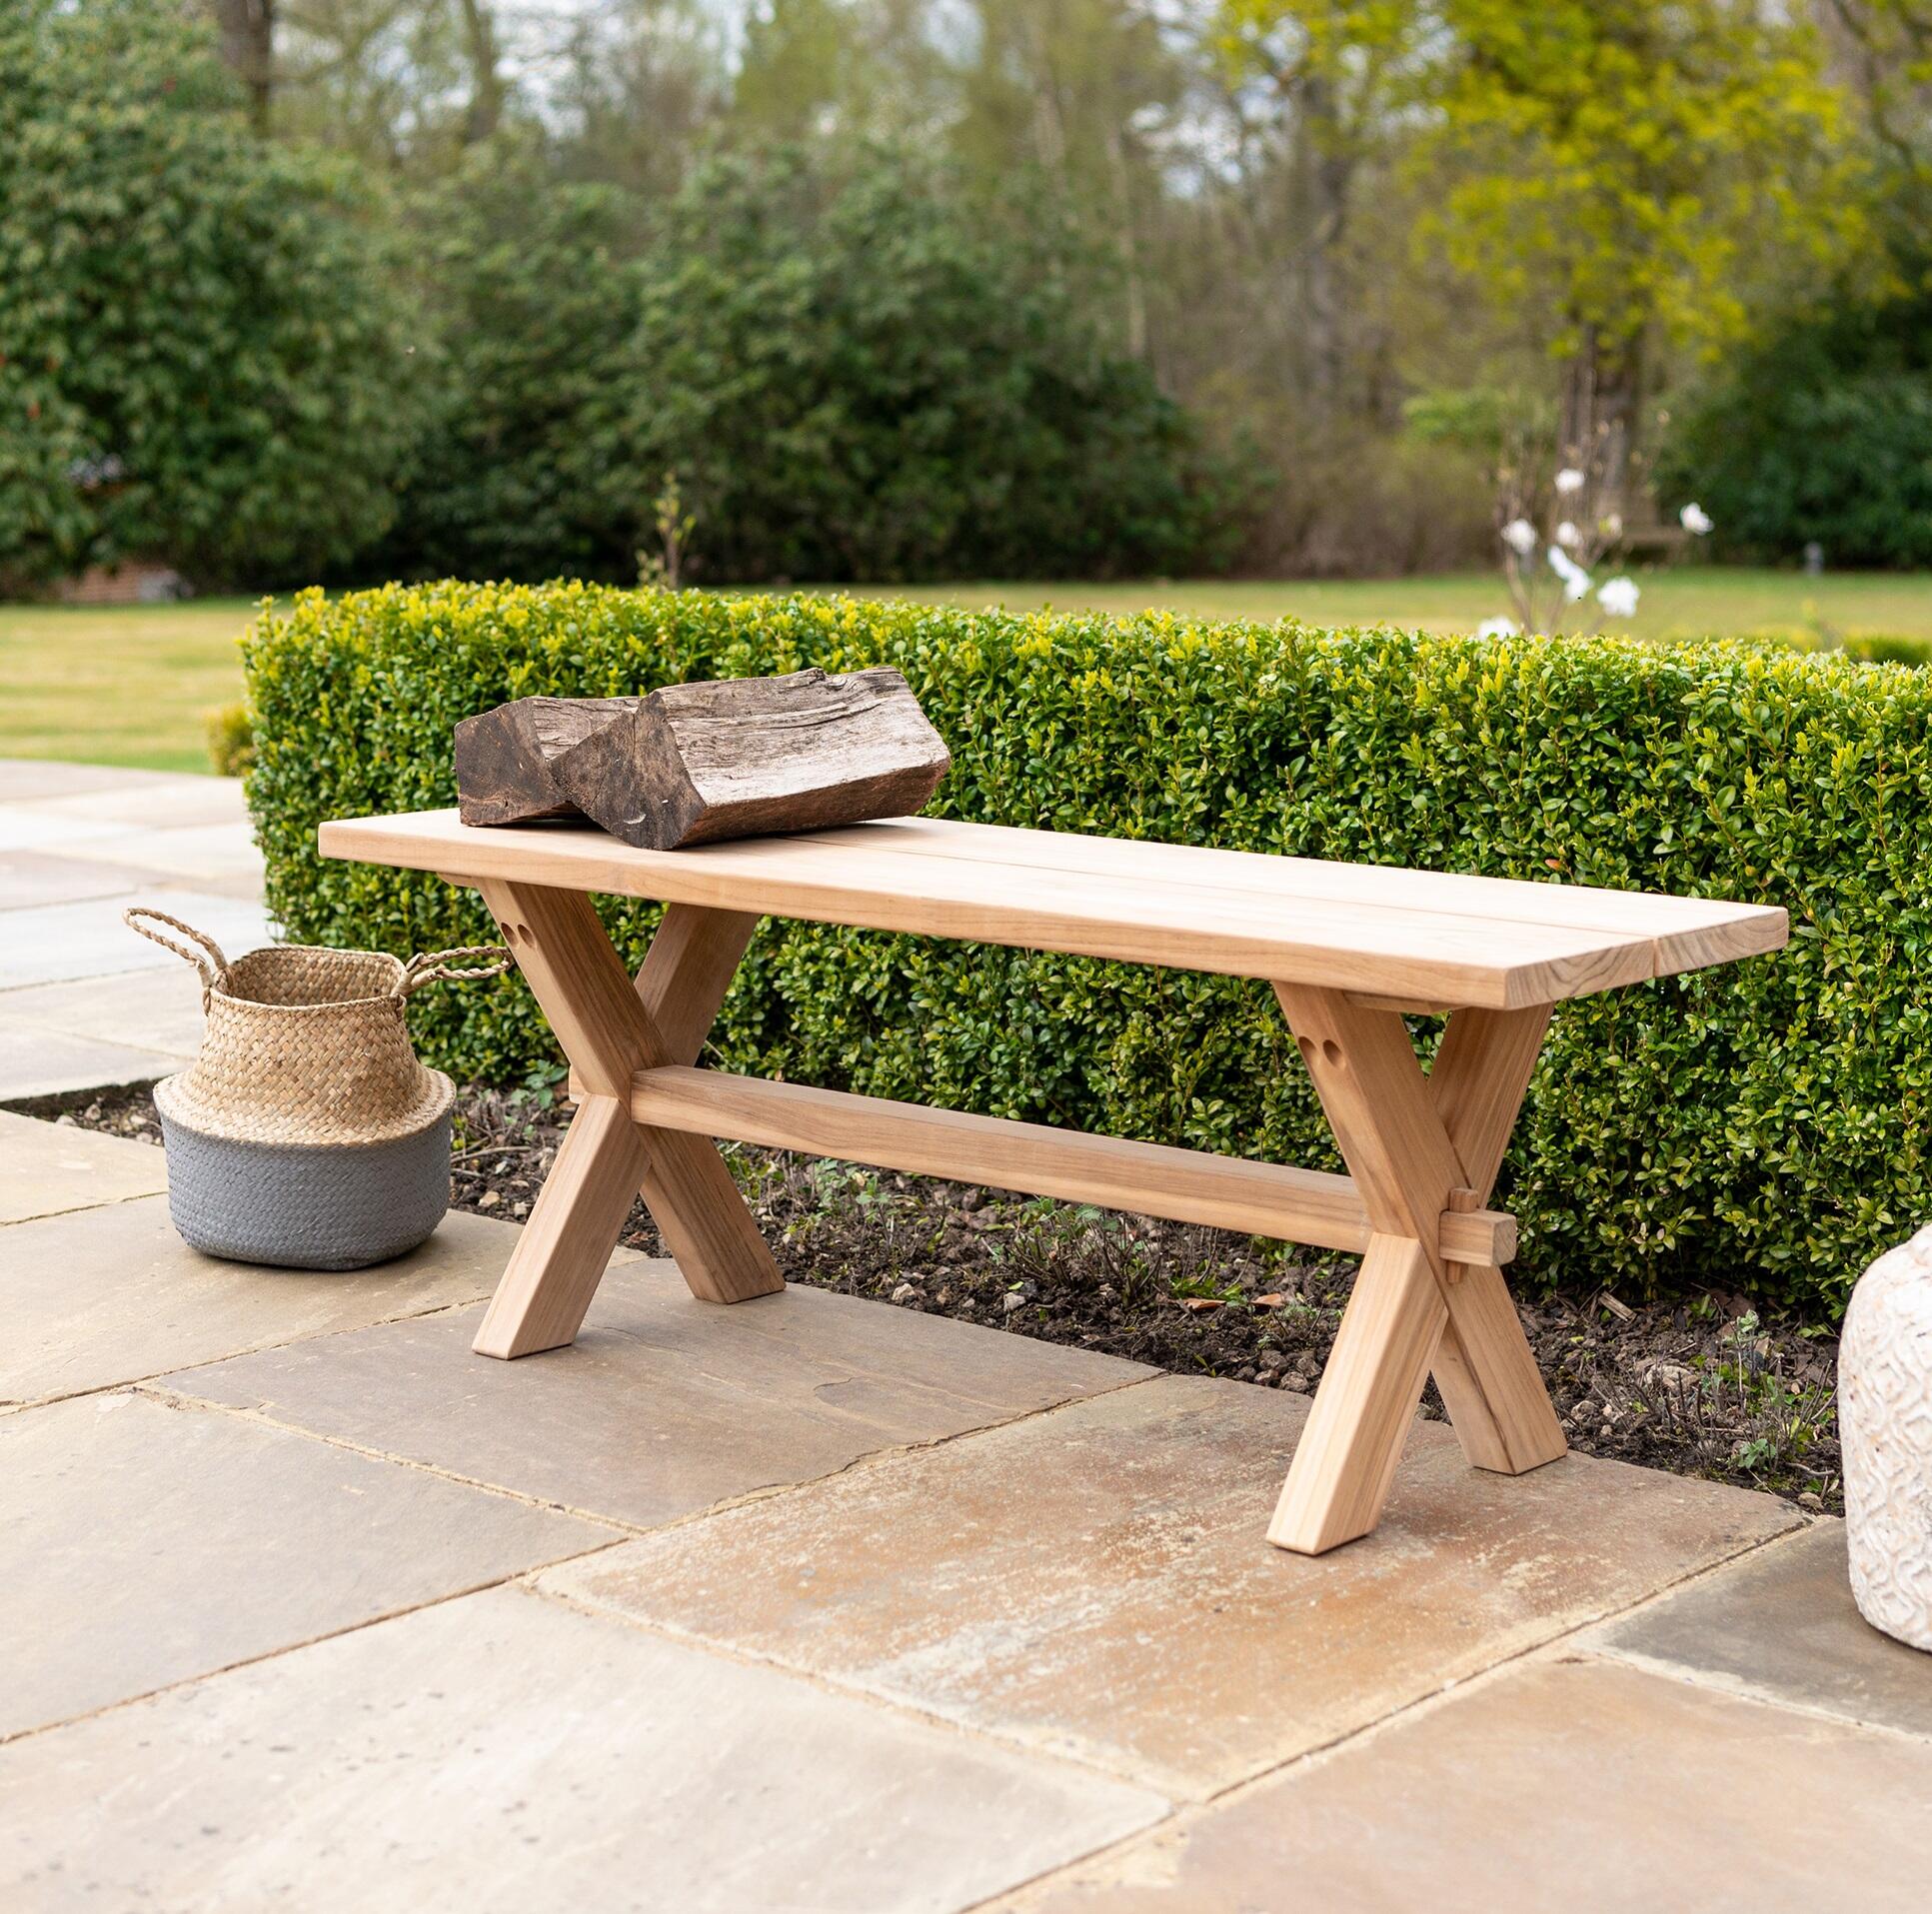 high grade teak garden bench for patio outdoor and indoor use